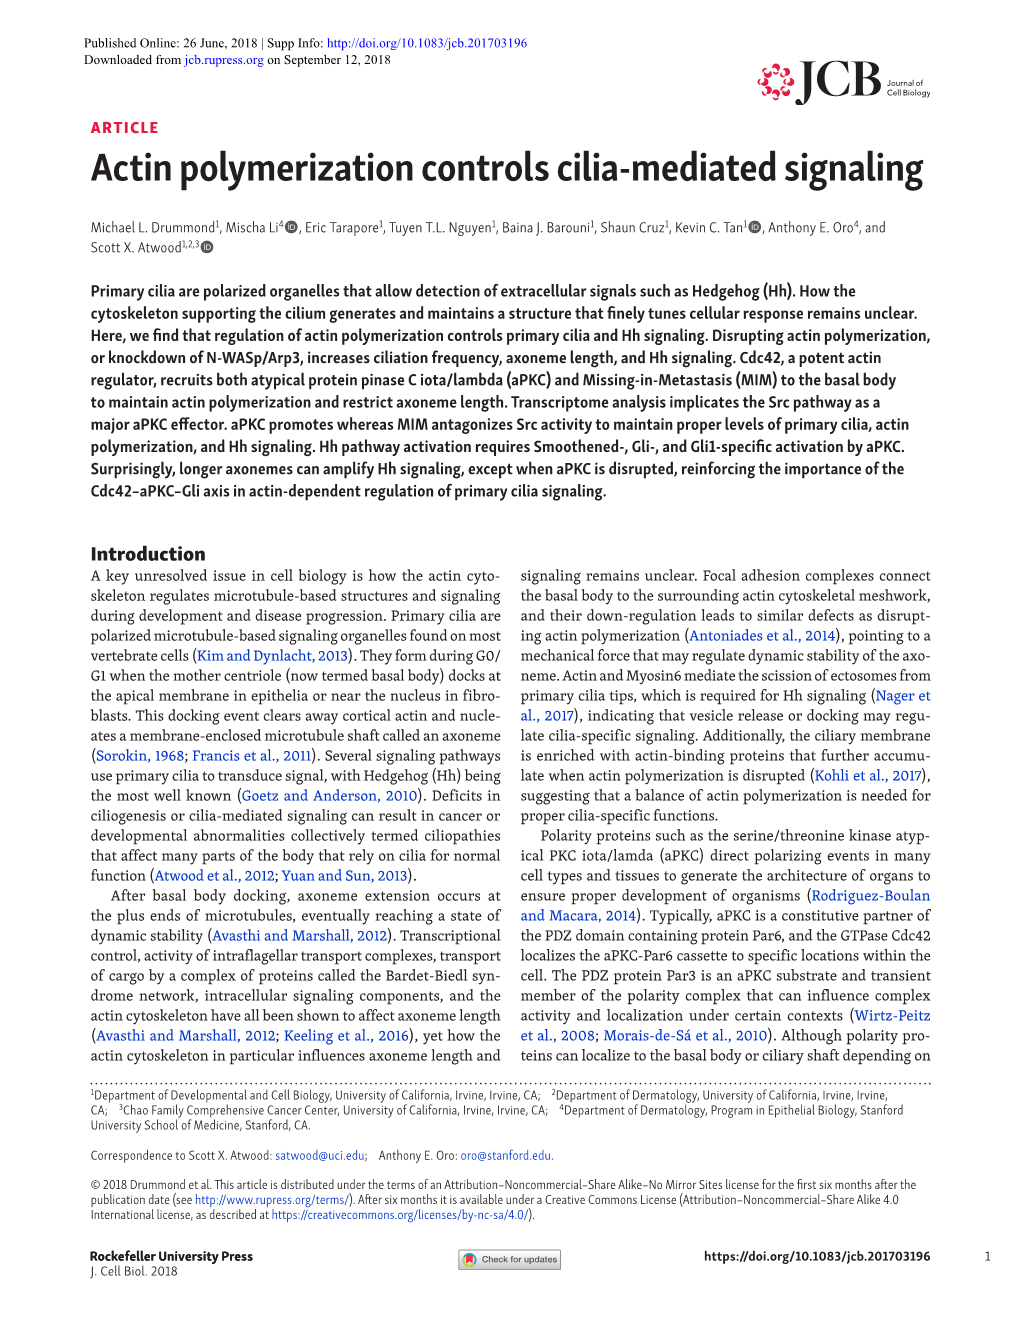 Actin Polymerization Controls Cilia-Mediated Signaling